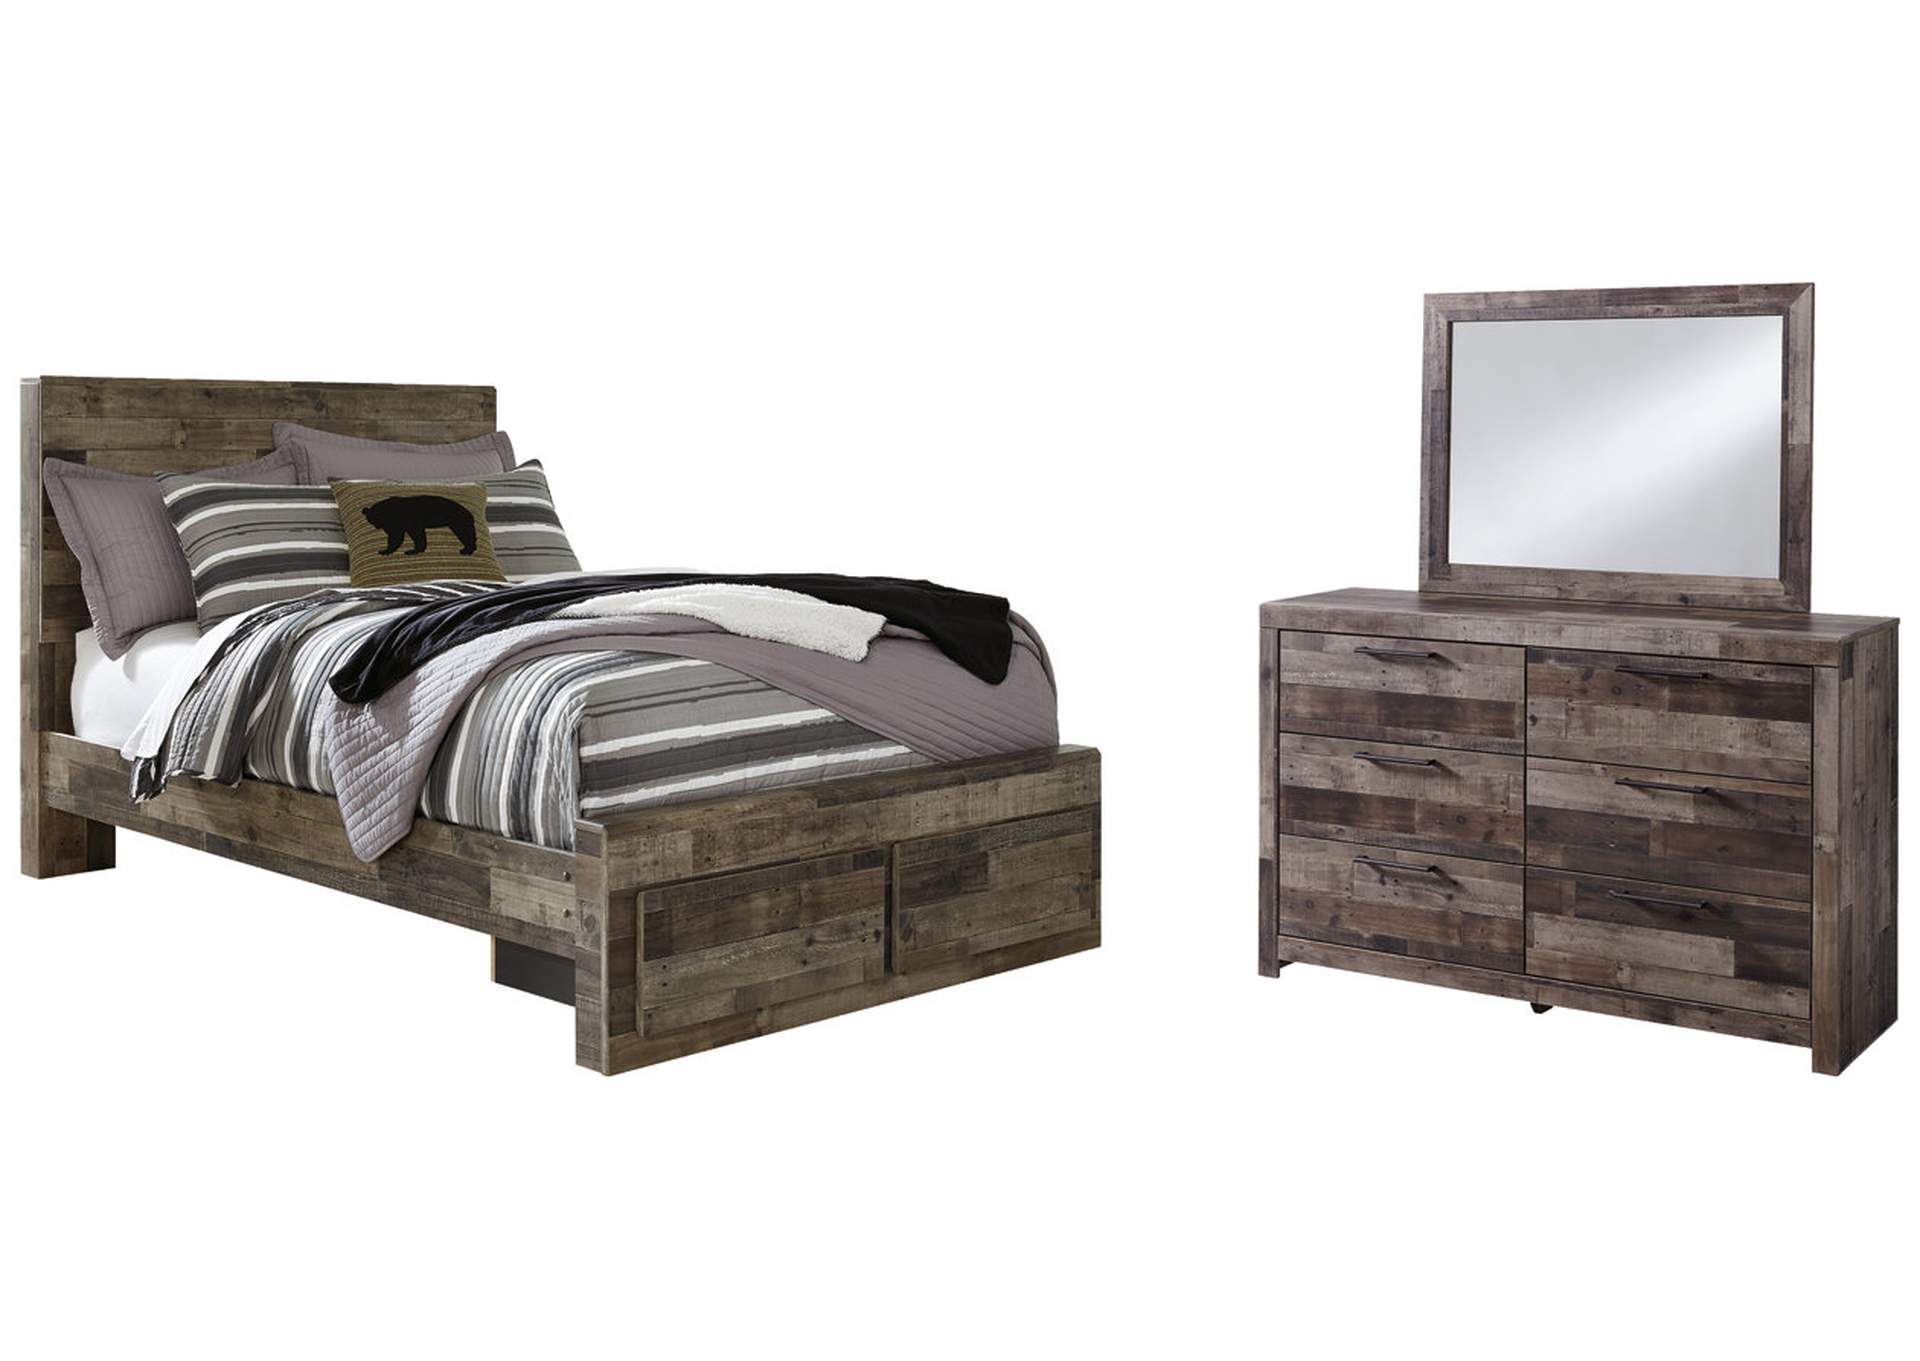 Derekson Full Panel Bed with 2 Storage Drawers with Mirrored Dresser,Benchcraft